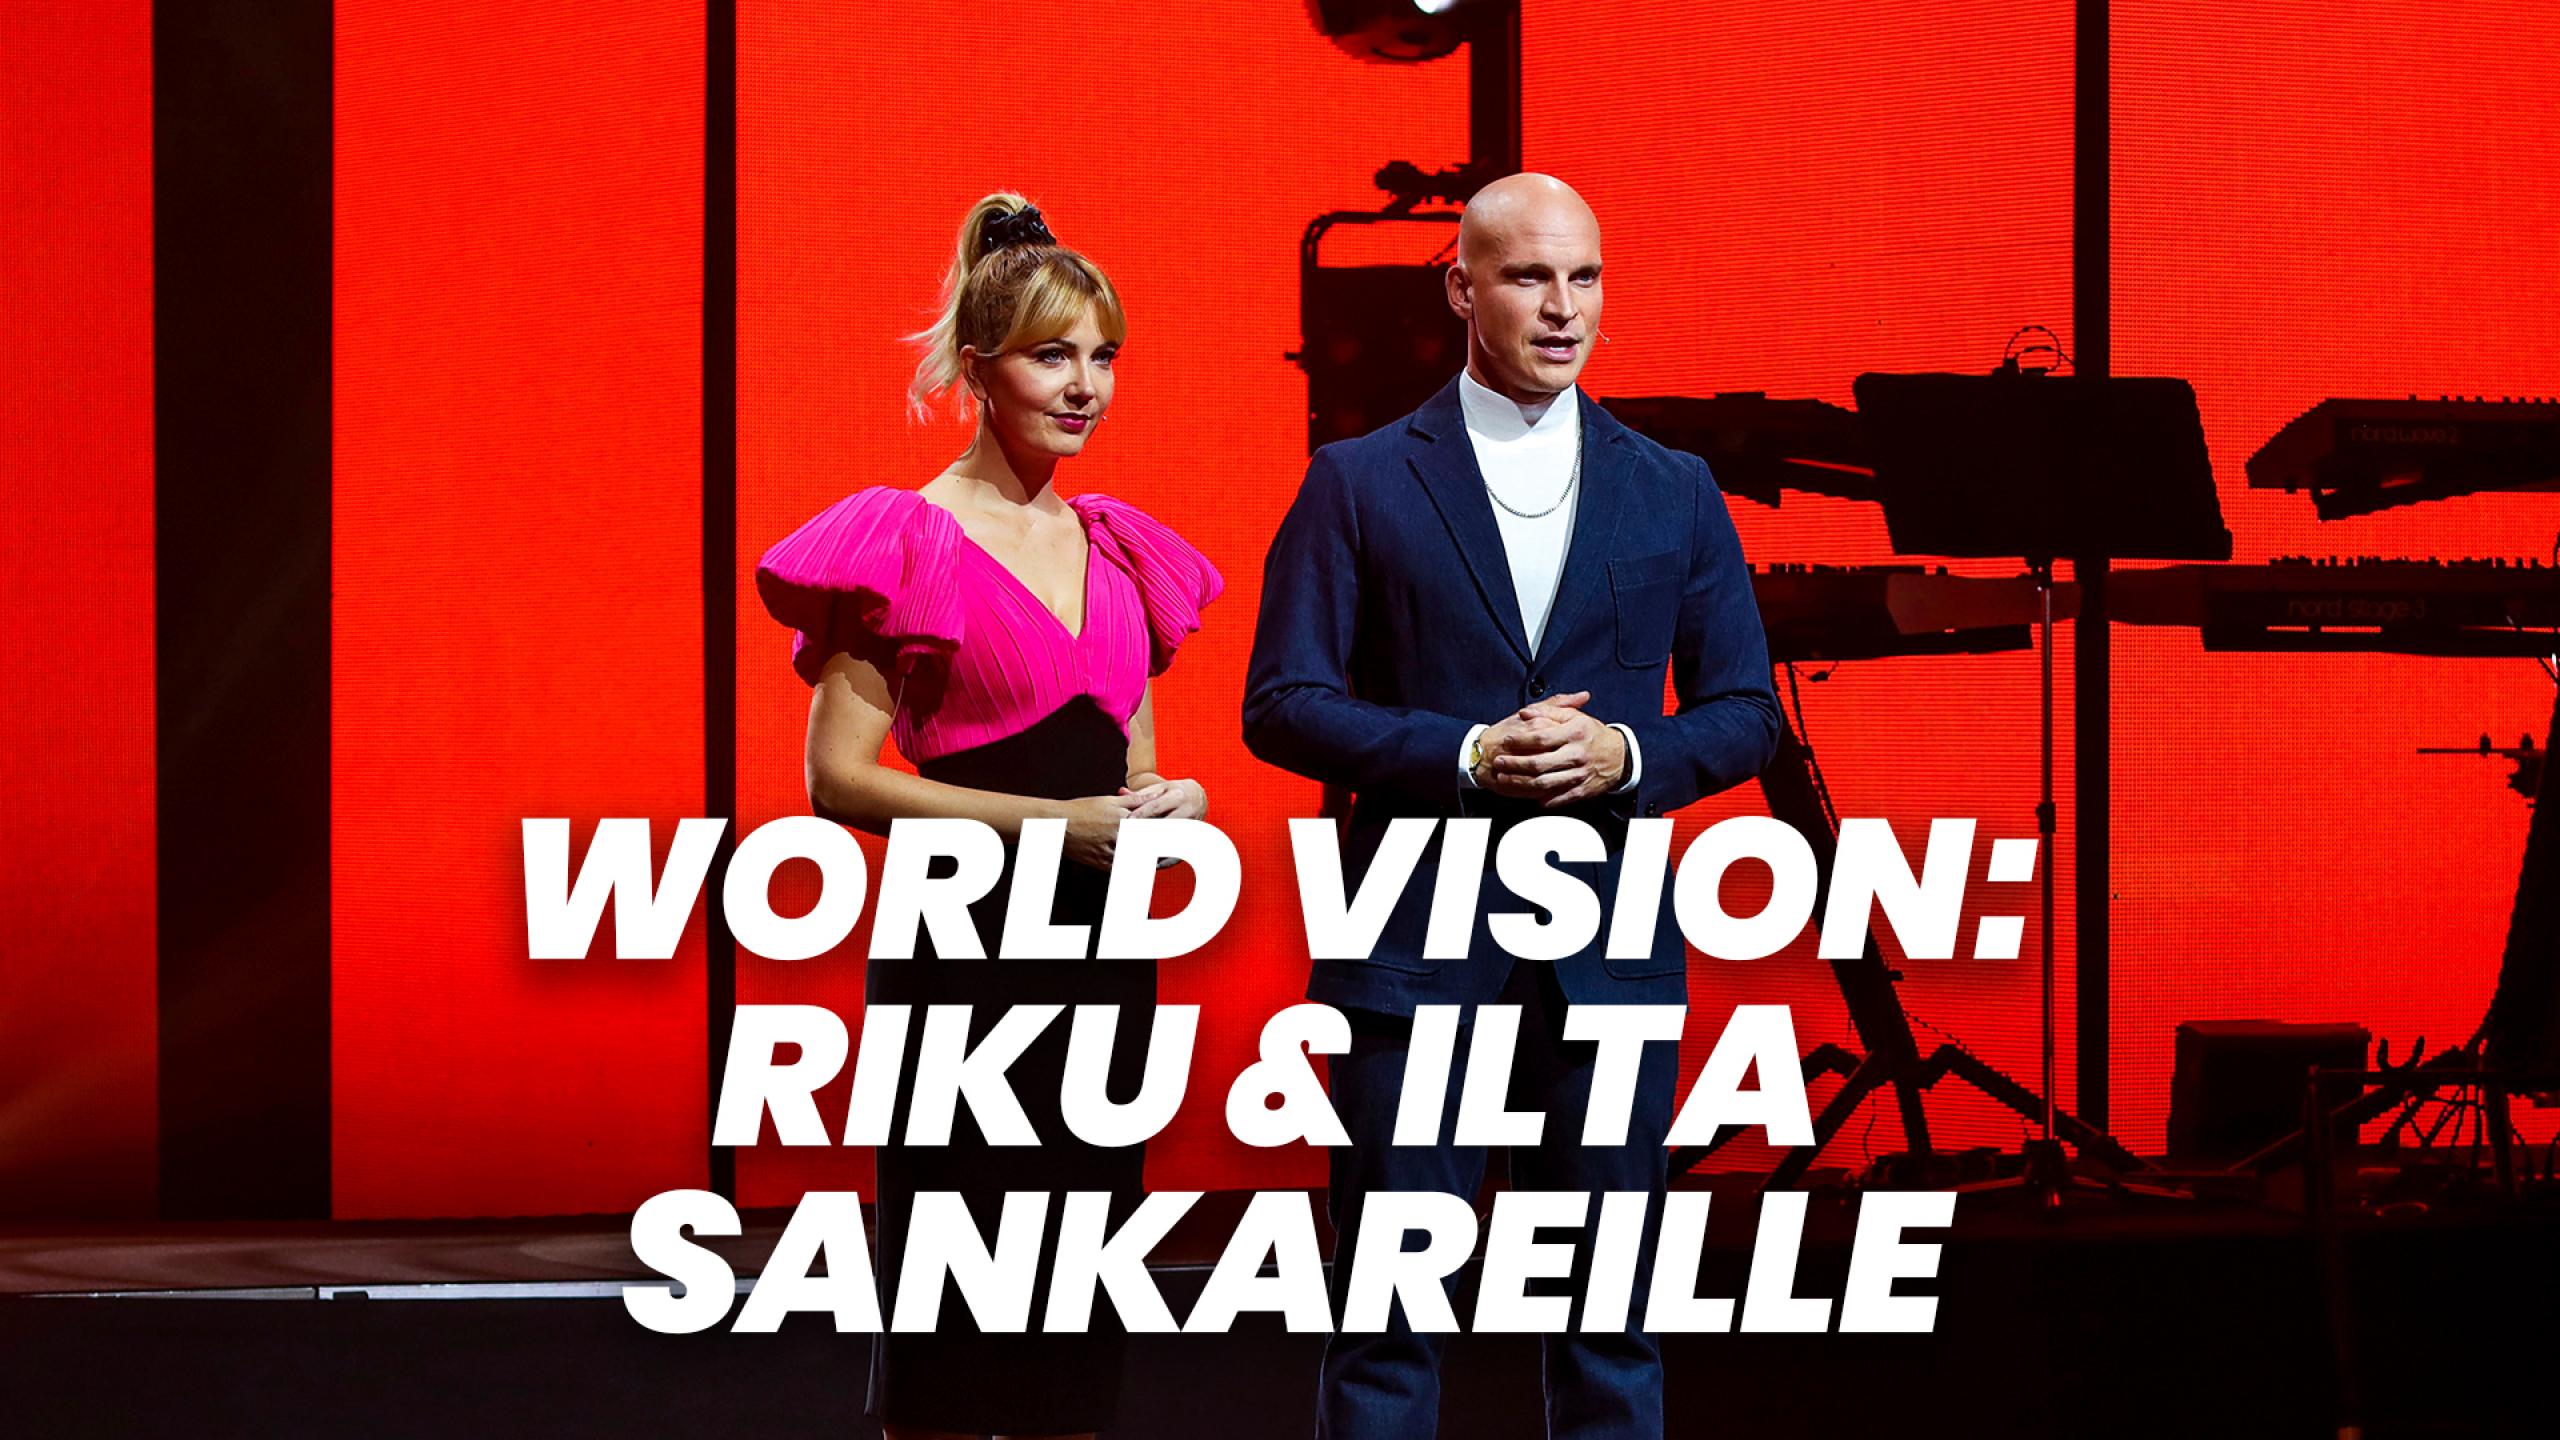 World Vision: Riku & ilta sankareille | Ruutu